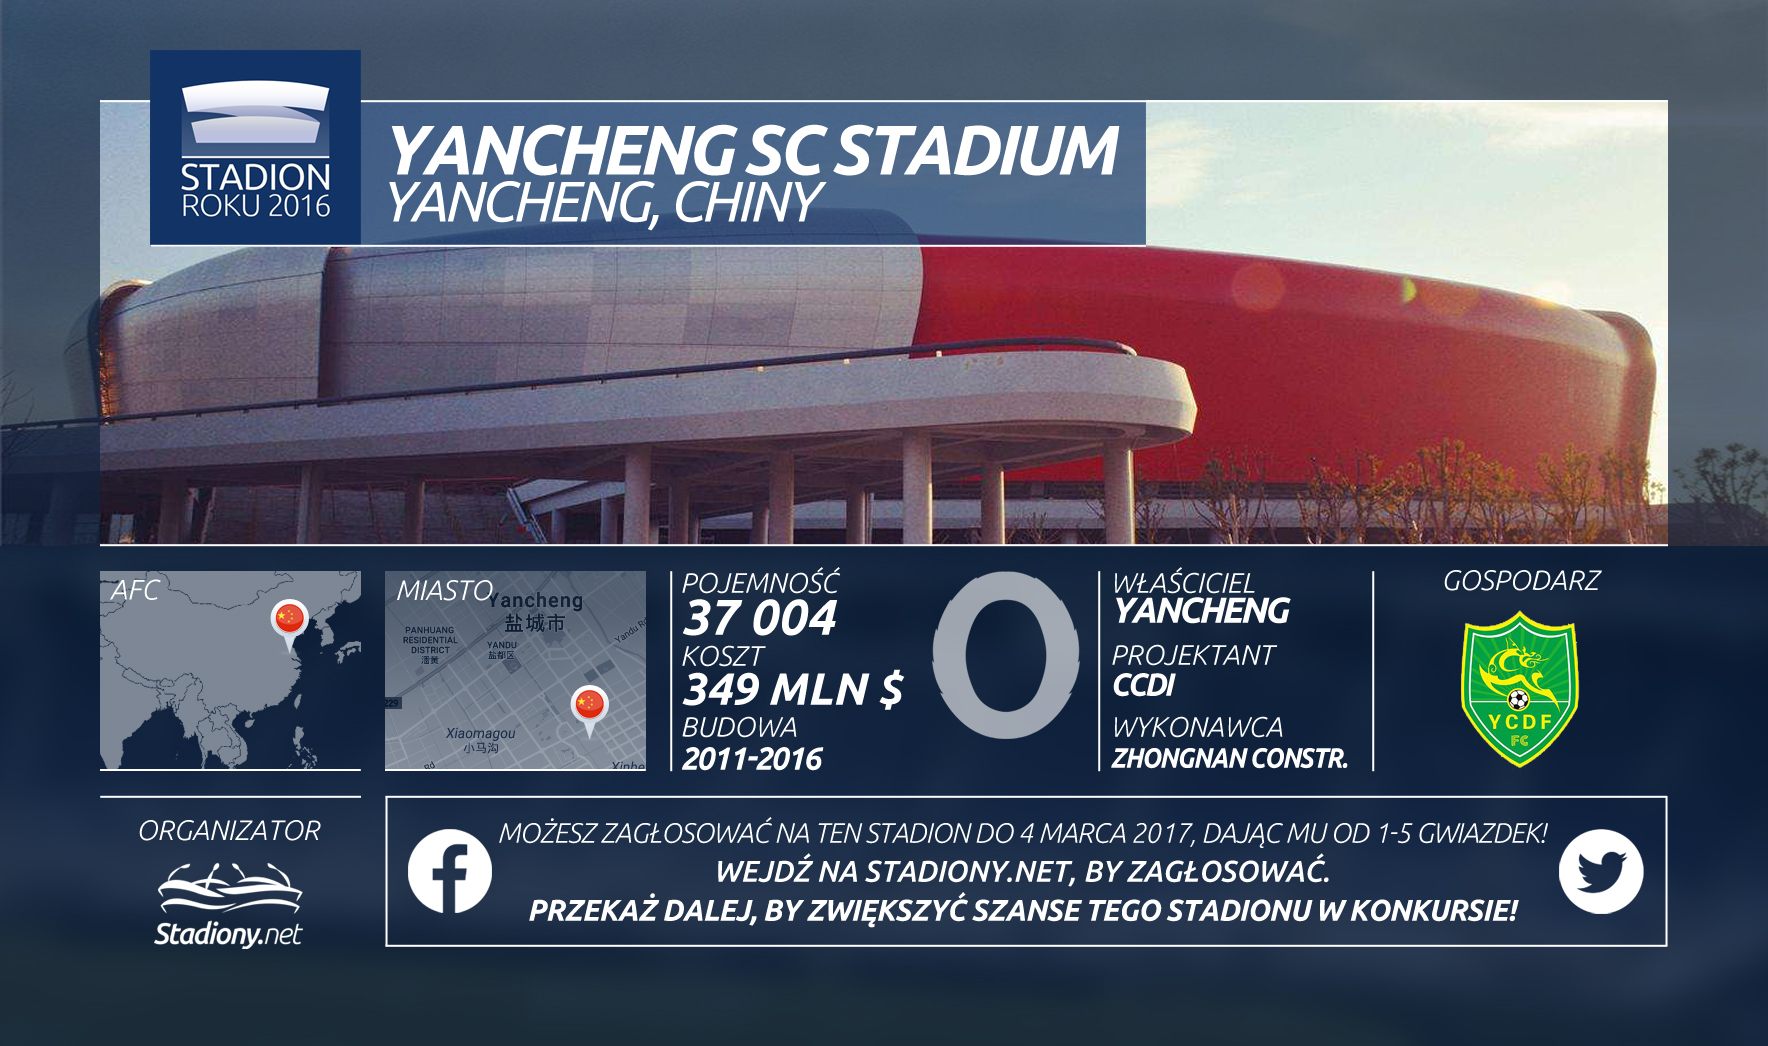 Yancheng SC Stadium